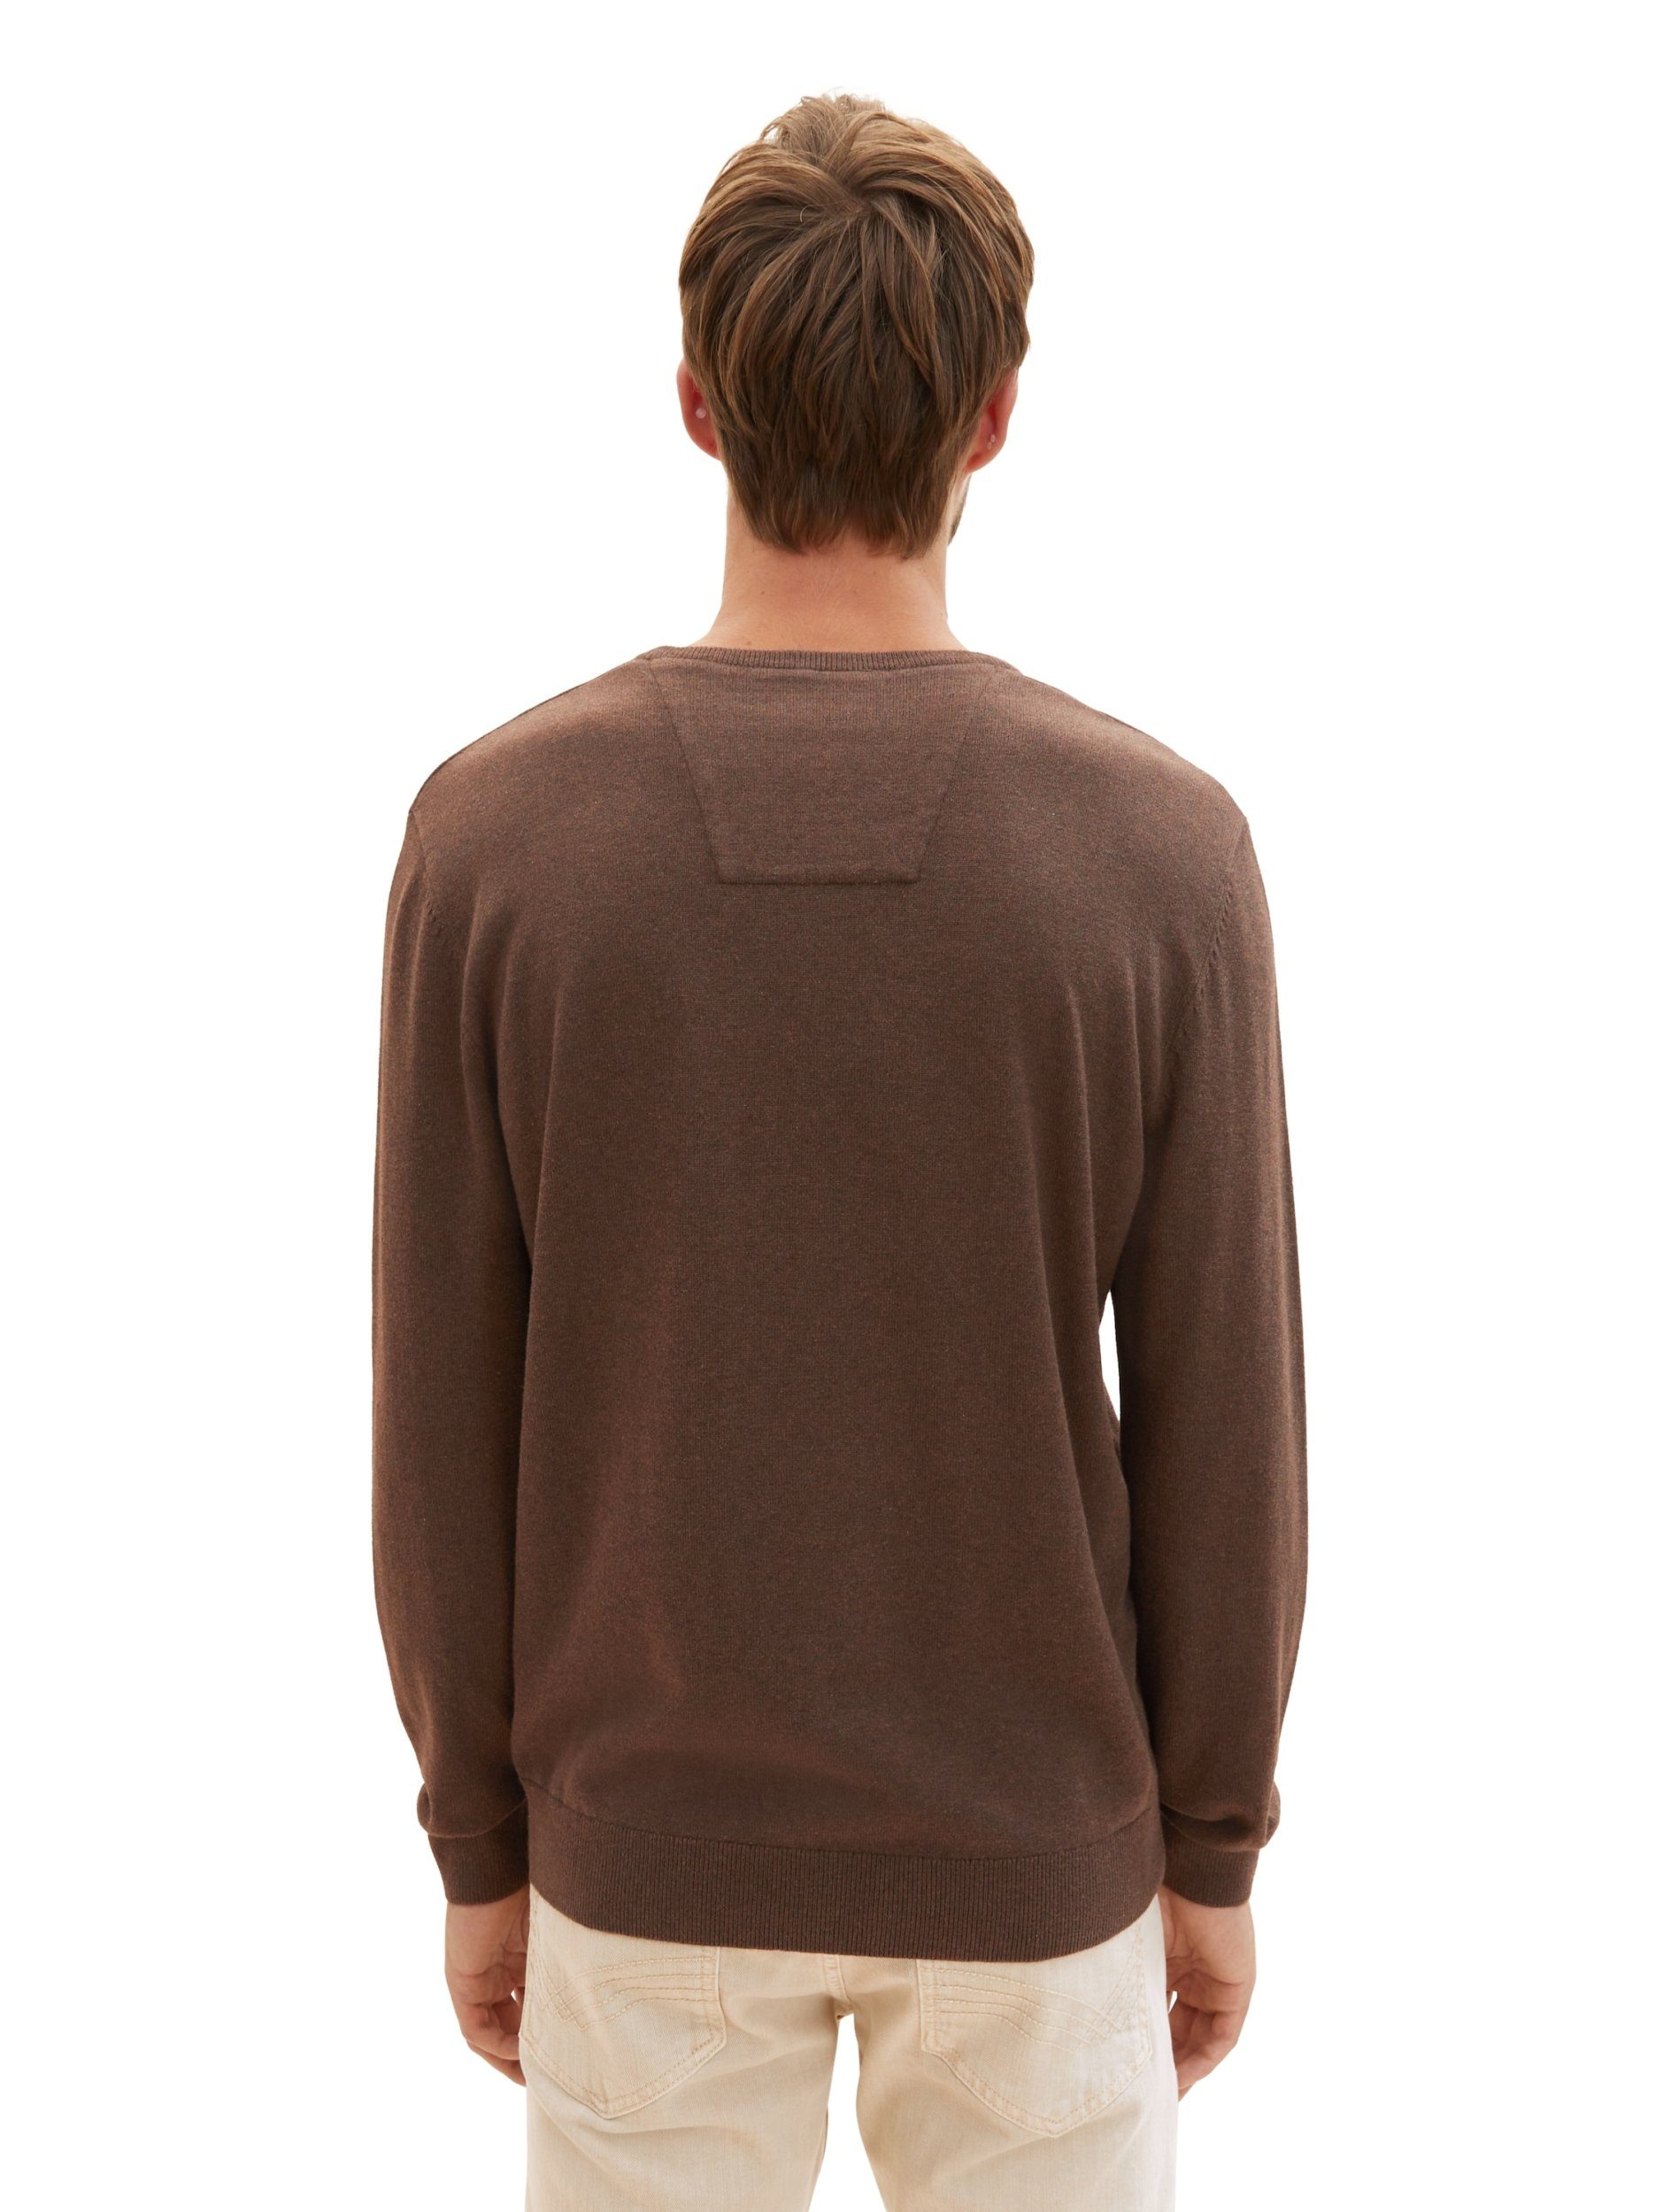 basic v-neck 32717 TOM TAILOR sweater Strickpullover